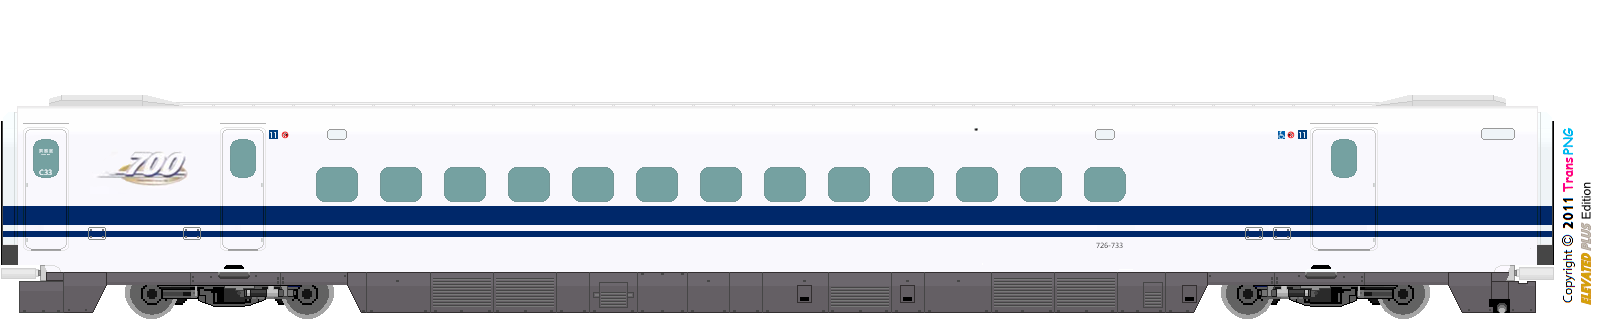 9010 - [9010] Central Japan Railway 52287846304_aea3ba819e_o